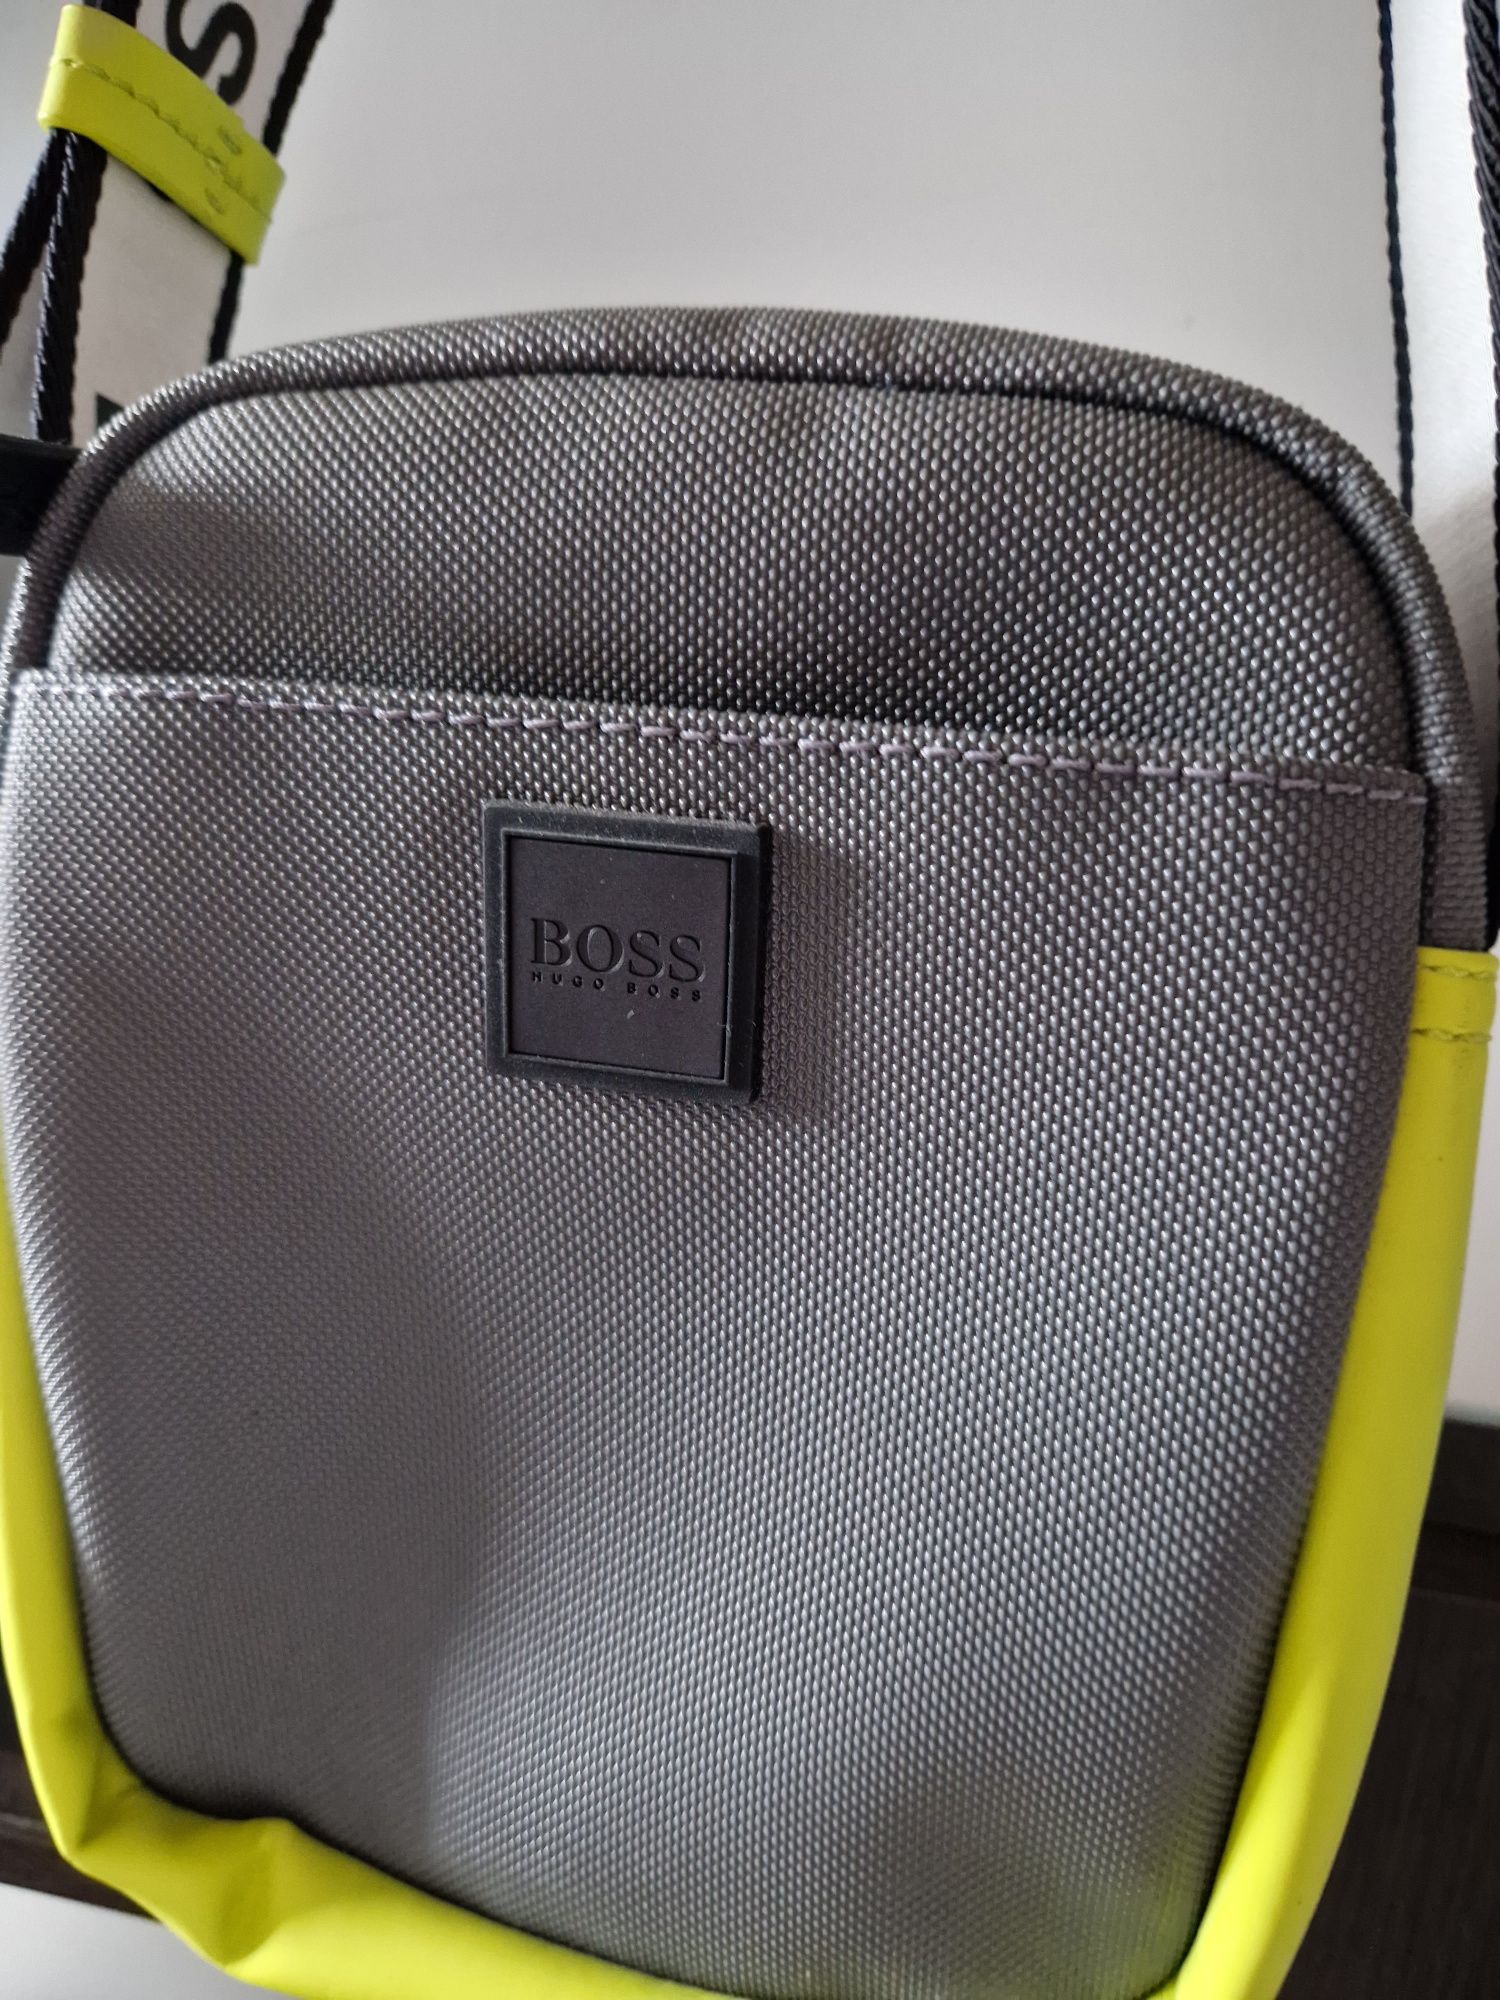 Hugo Boss Hyper torebka torba listonoszka na ramię męska